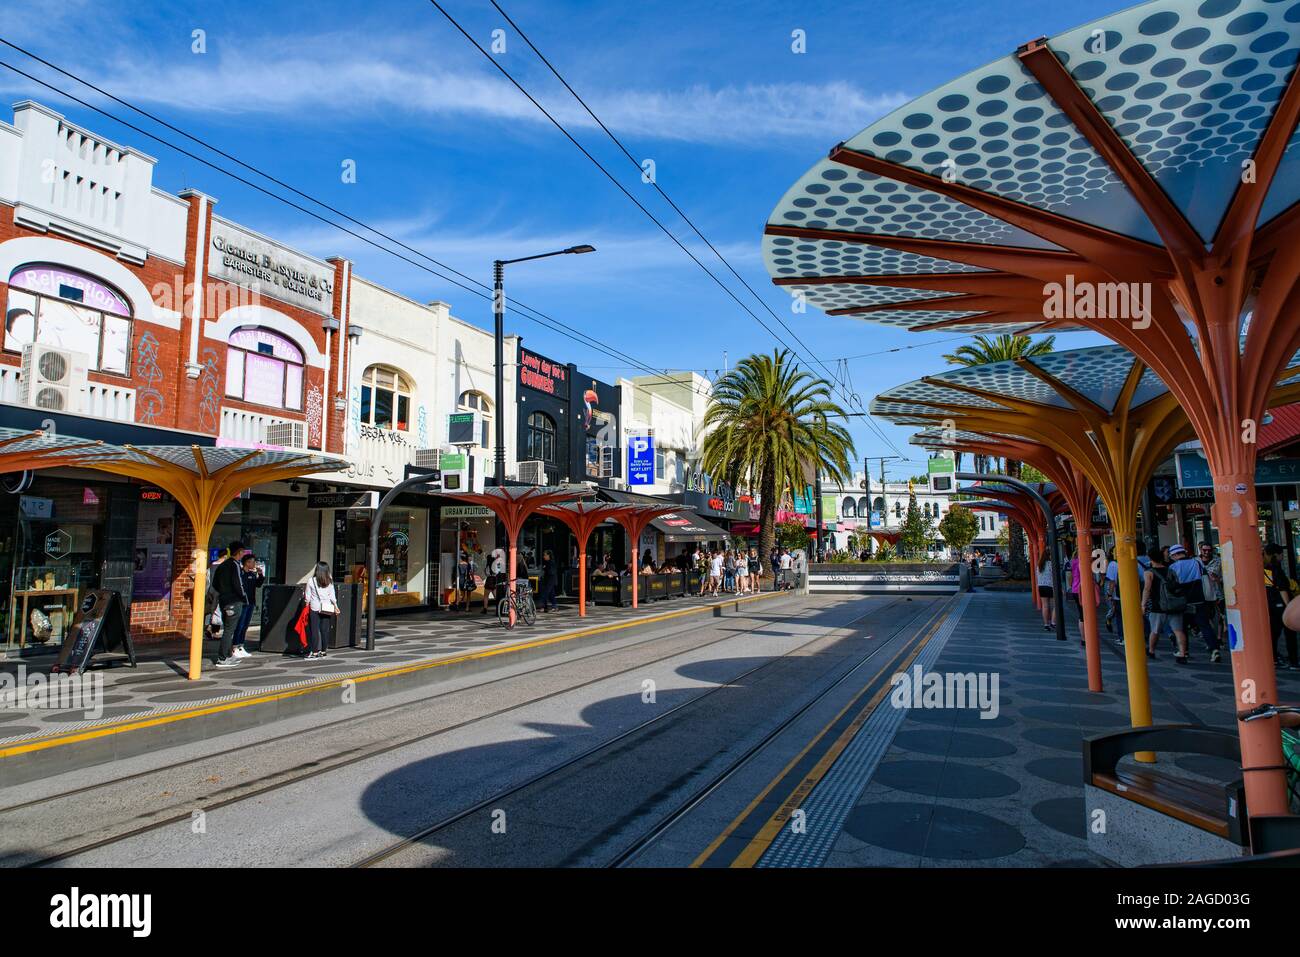 Street view of St Kilda, a famous beach town in Melbourne, Australia Stock Photo